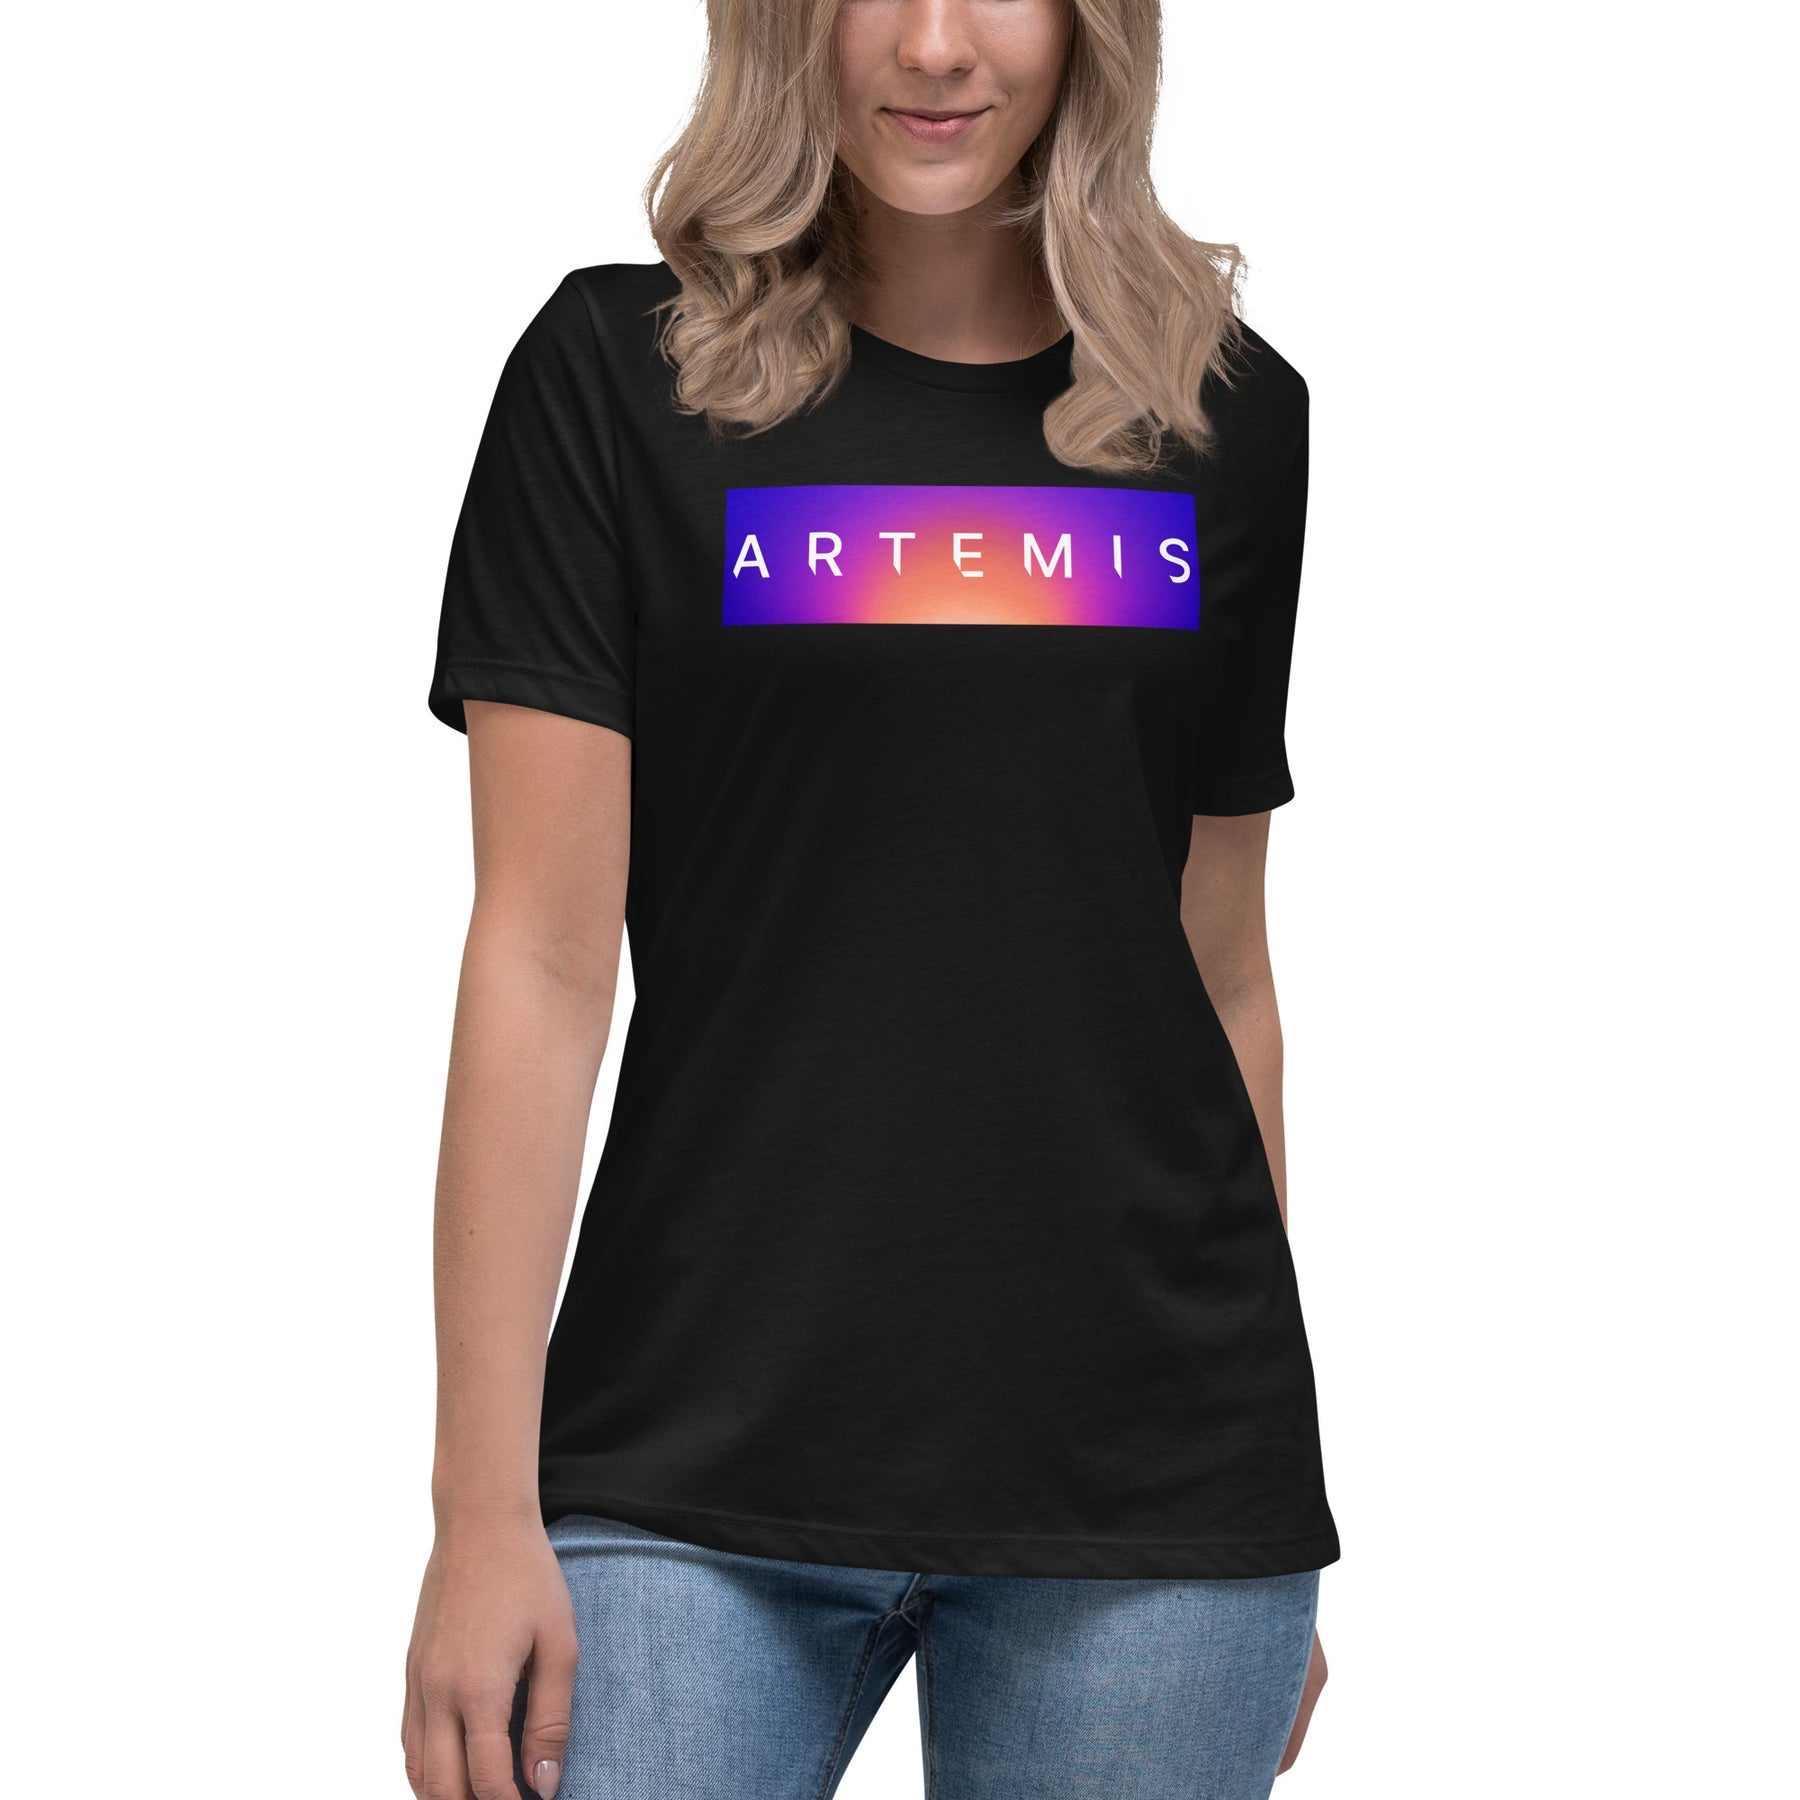 ARTEMIS  Women's Relaxed T-Shirt